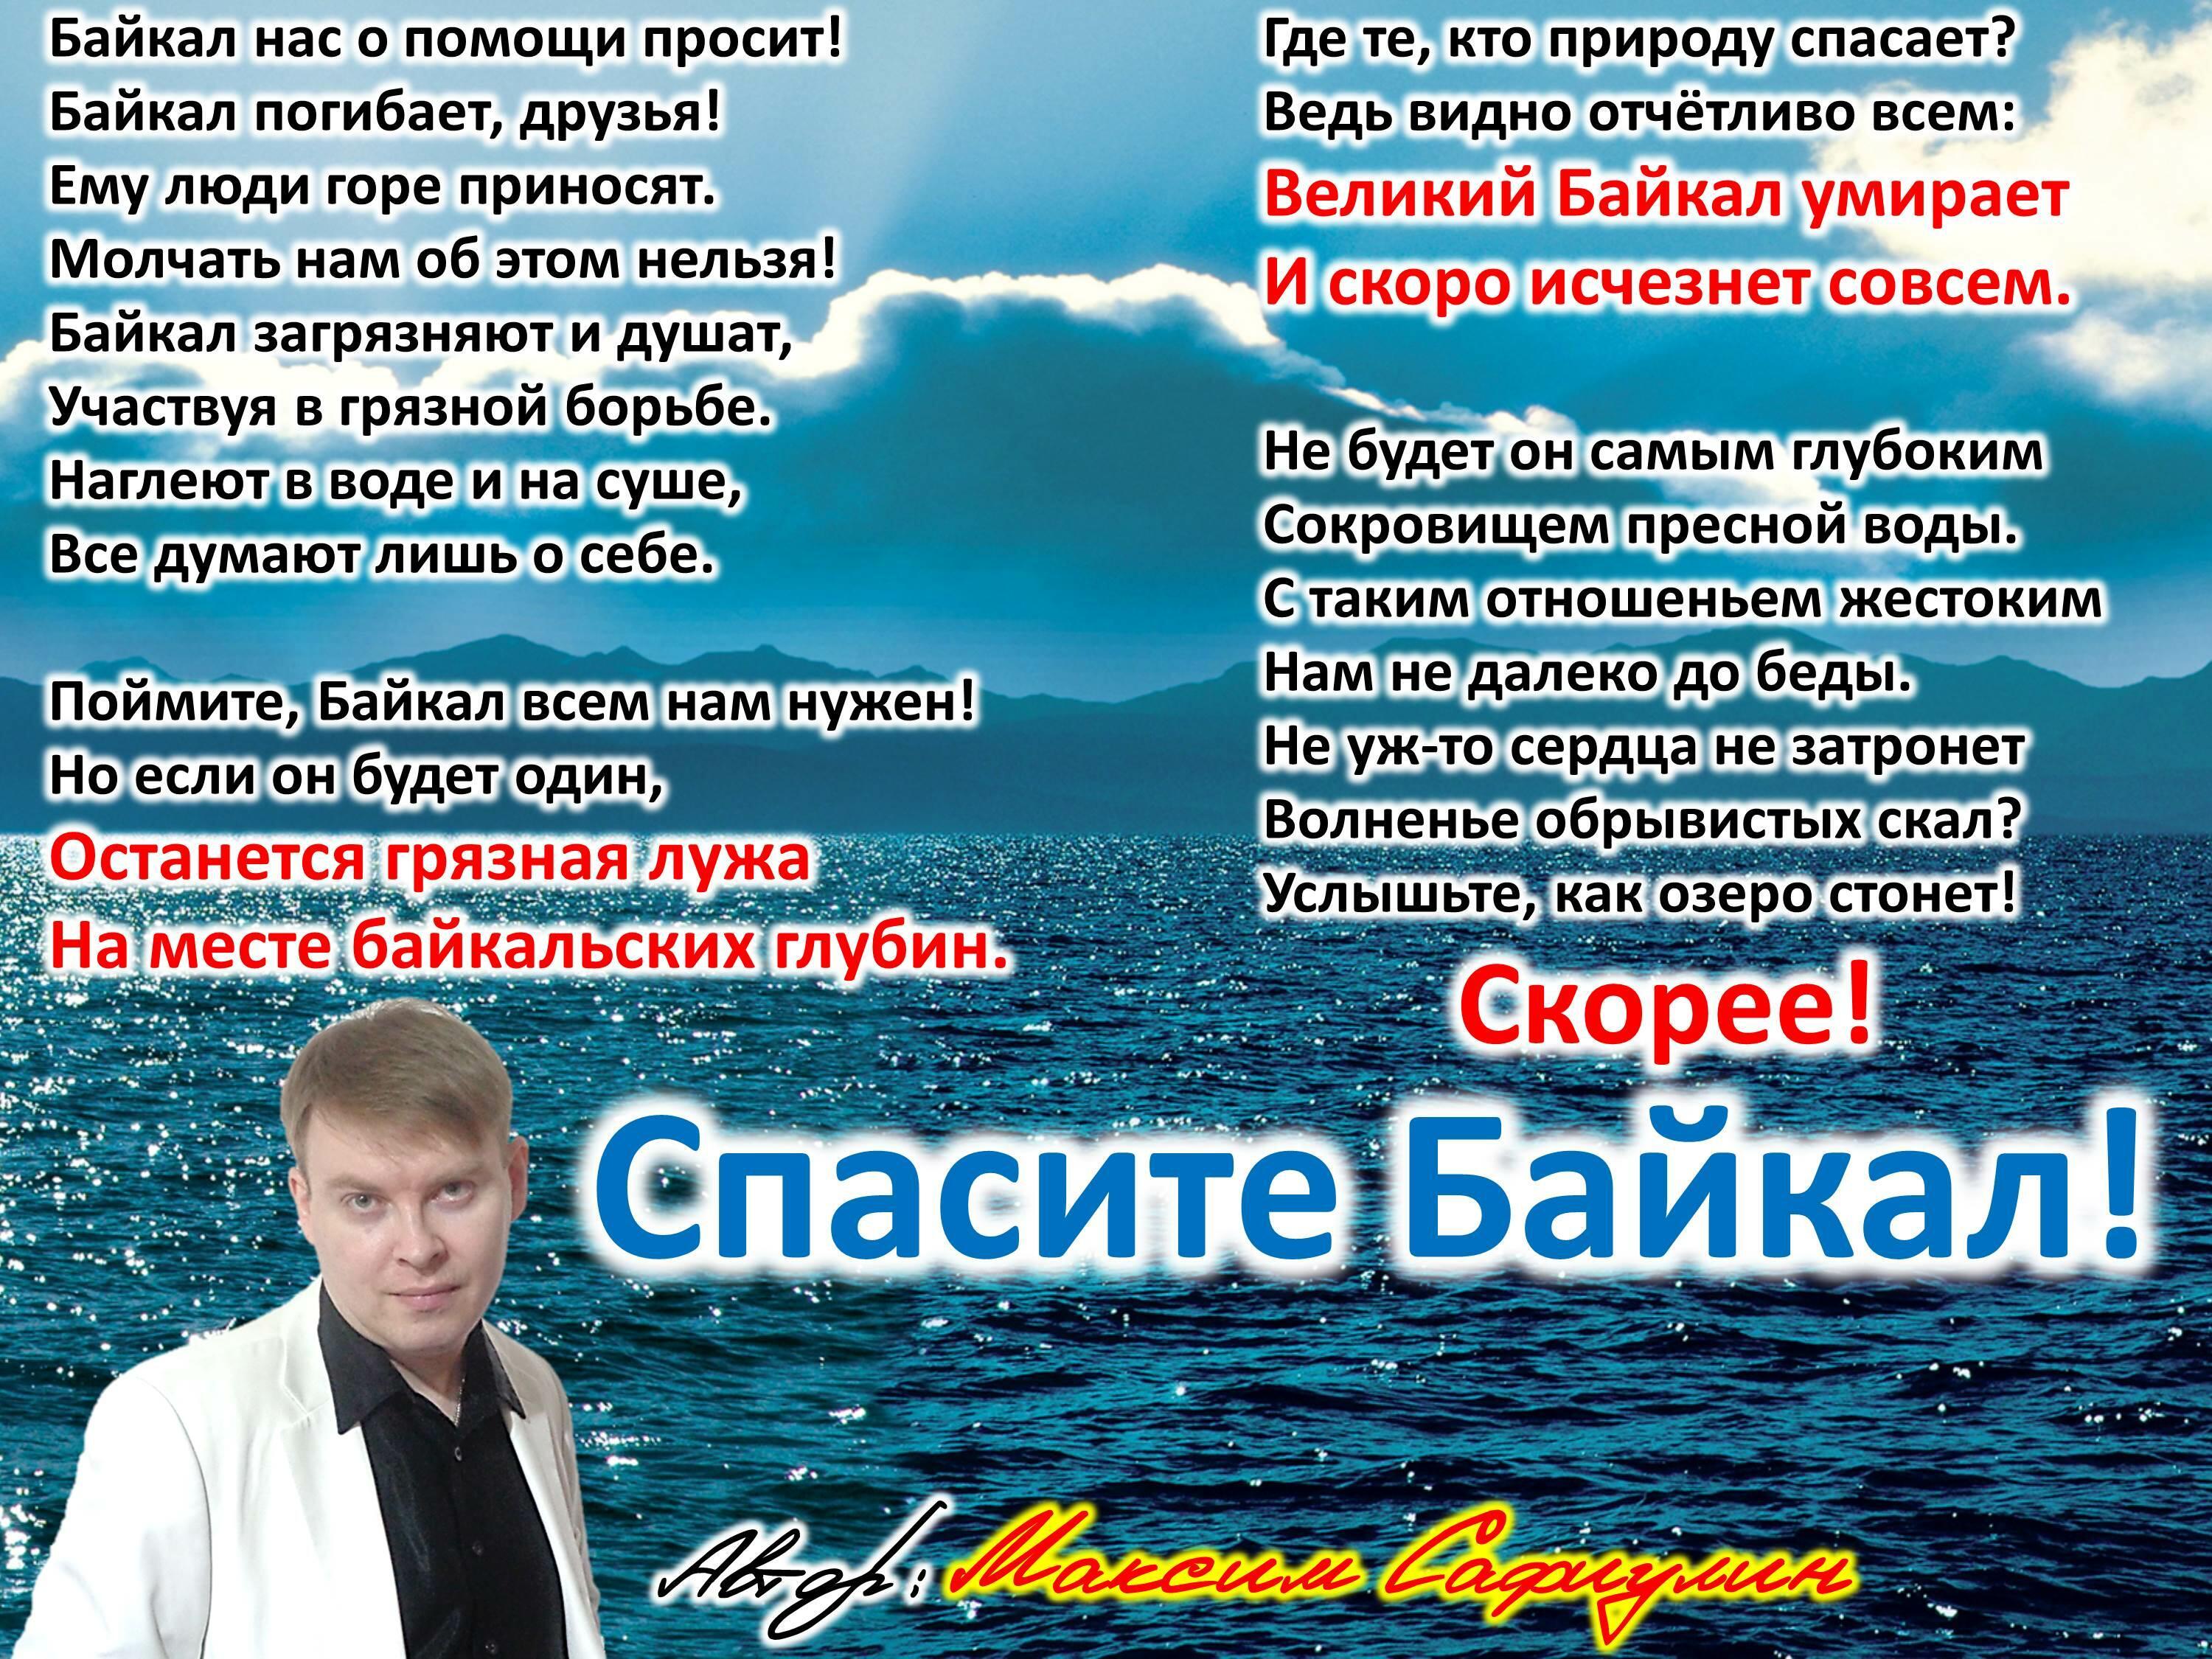 Спасите Байкал!